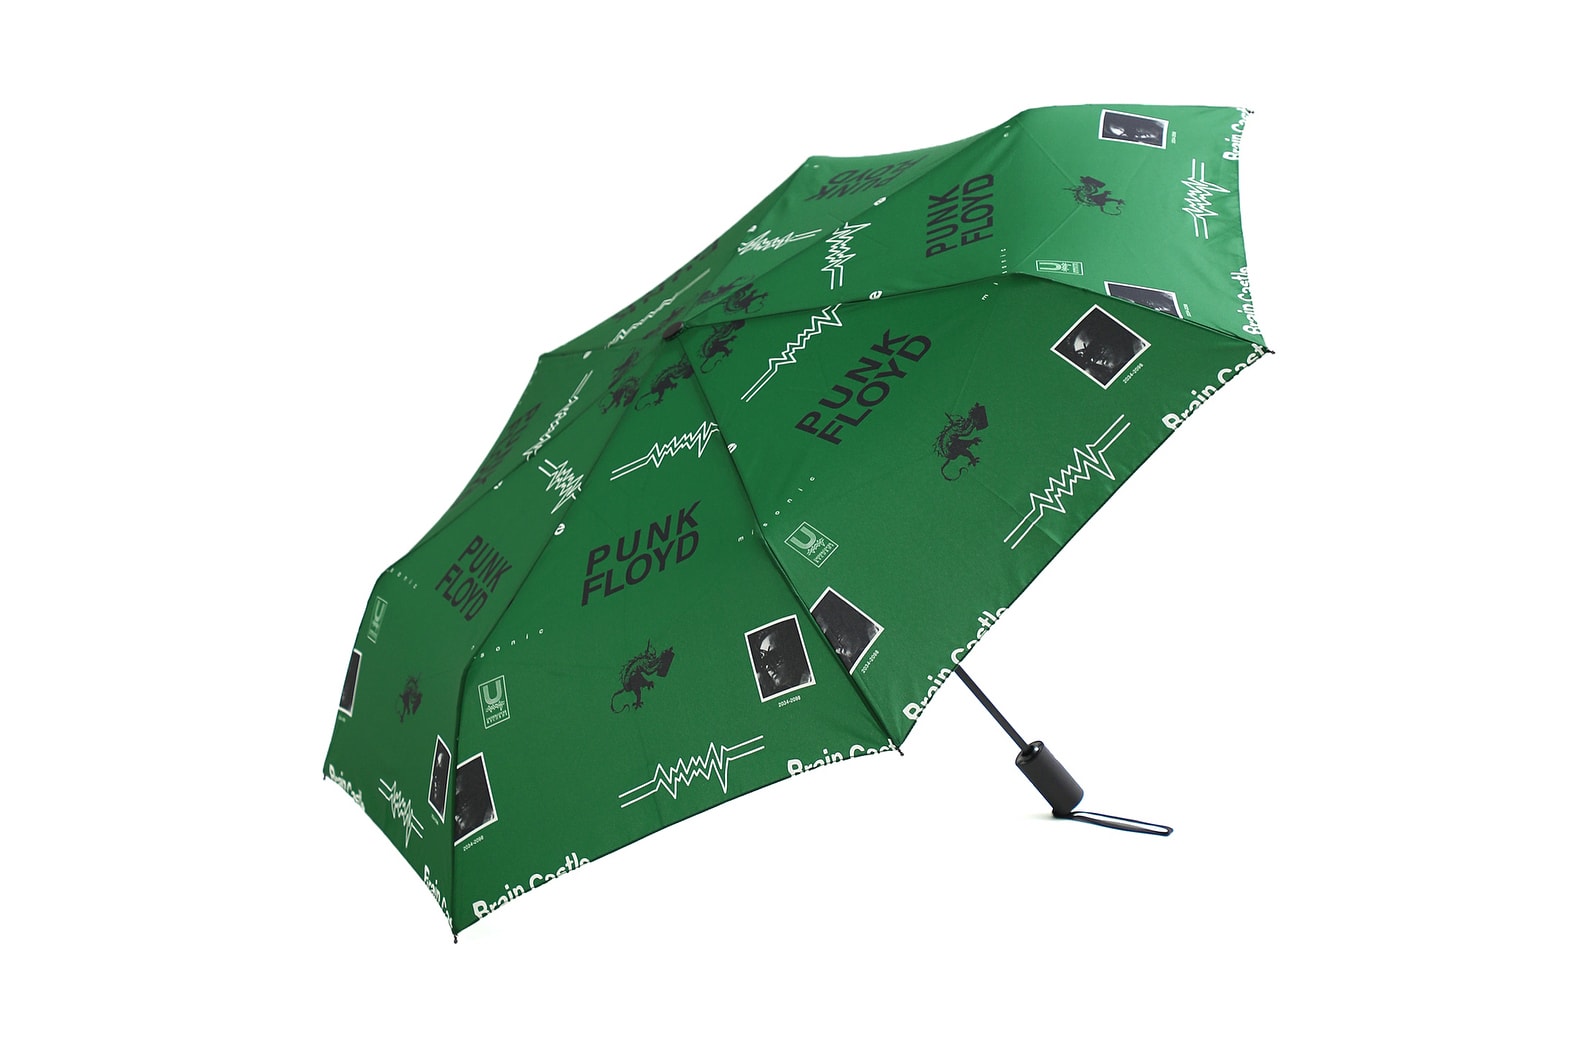 undercover kiu collaboration july 21 2018 printed umbrella green punk floyd brain castle green black